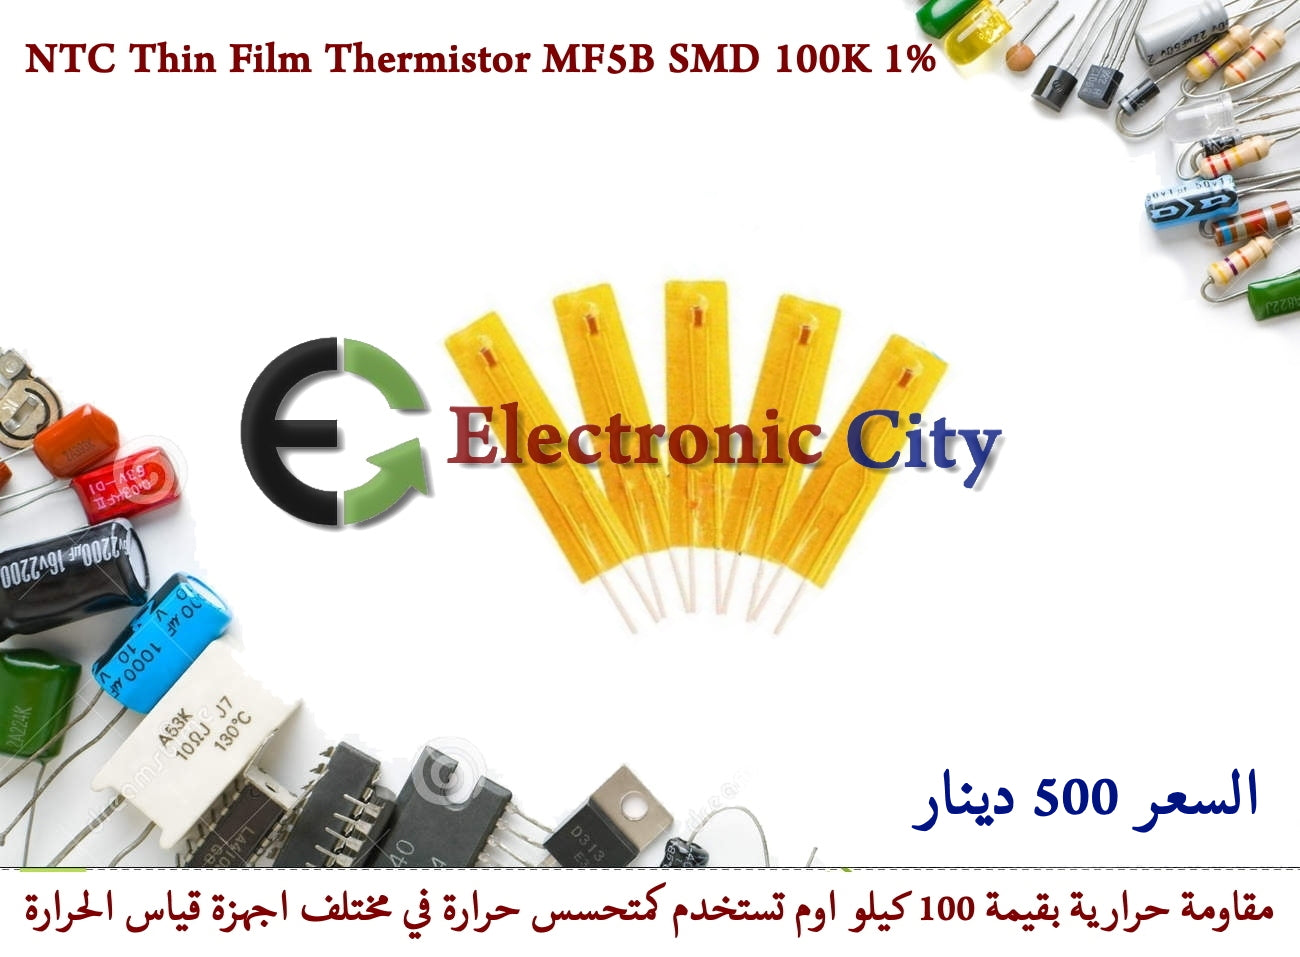 NTC Thin Film Thermistor MF5B SMD 100K 1% #J4.  11310